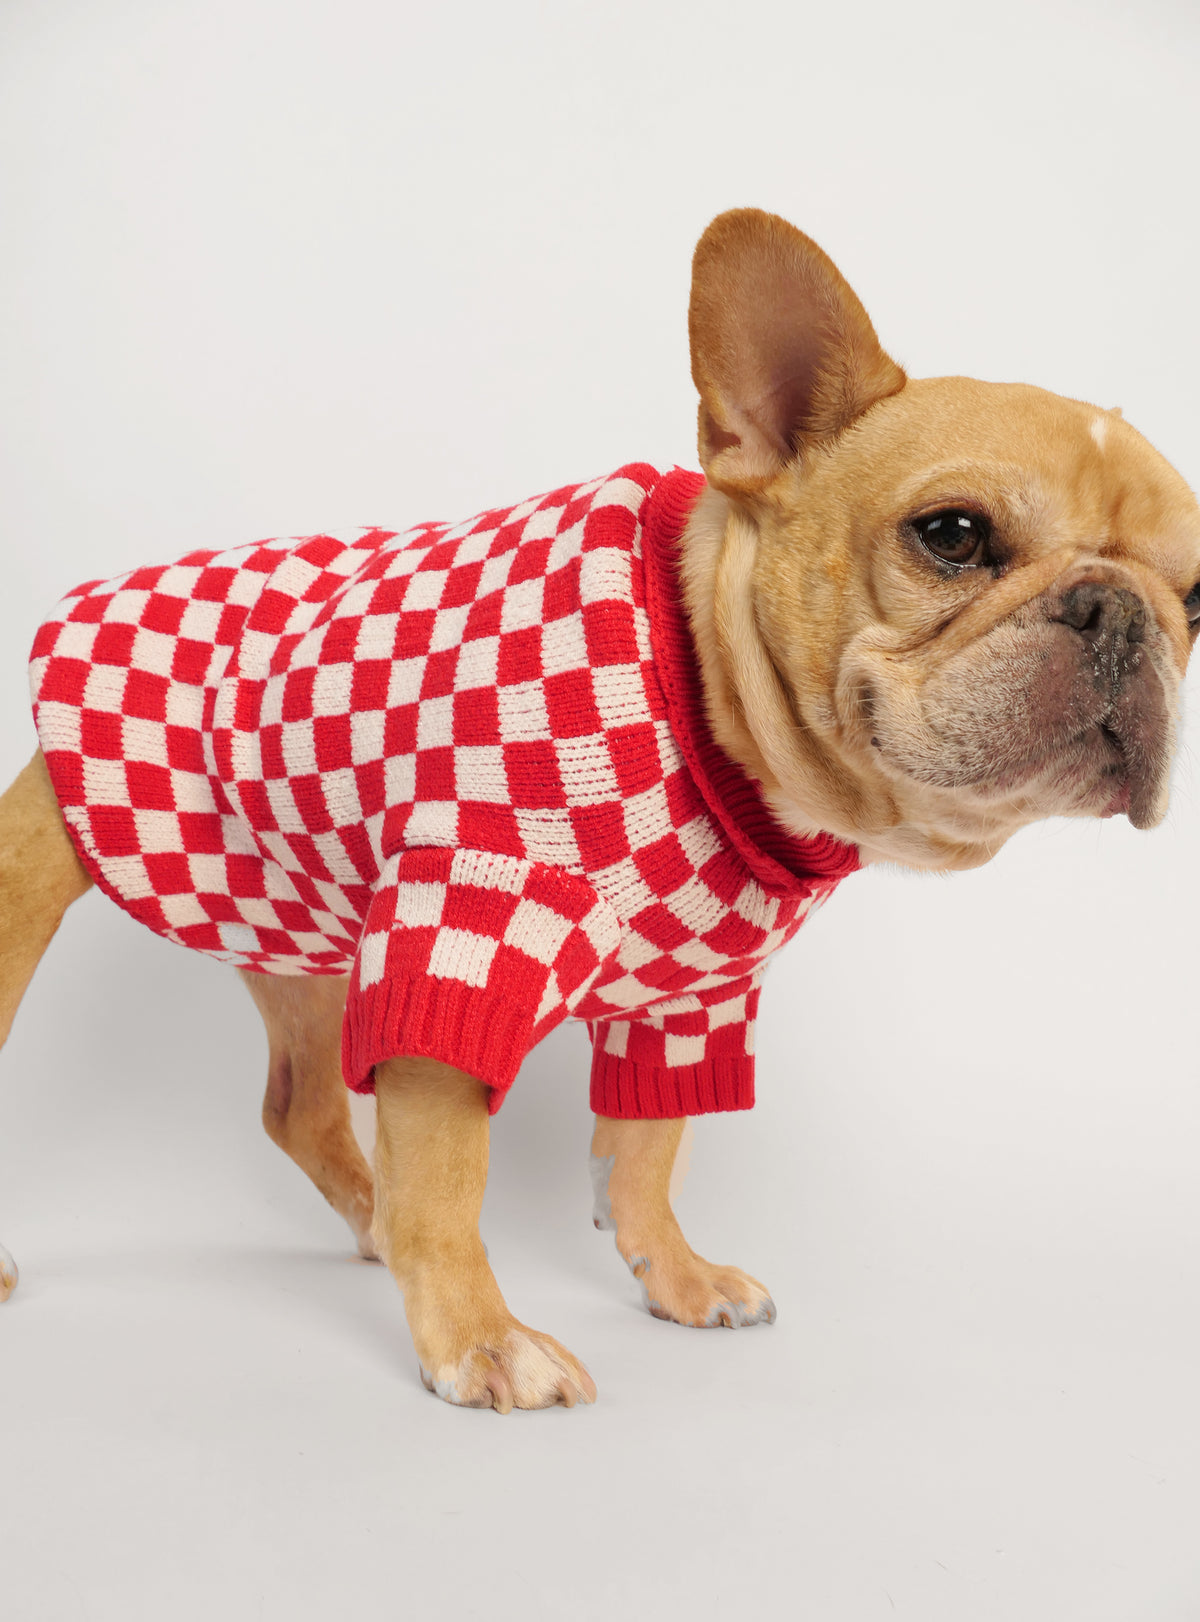 The Checkerboard Dog Sweater